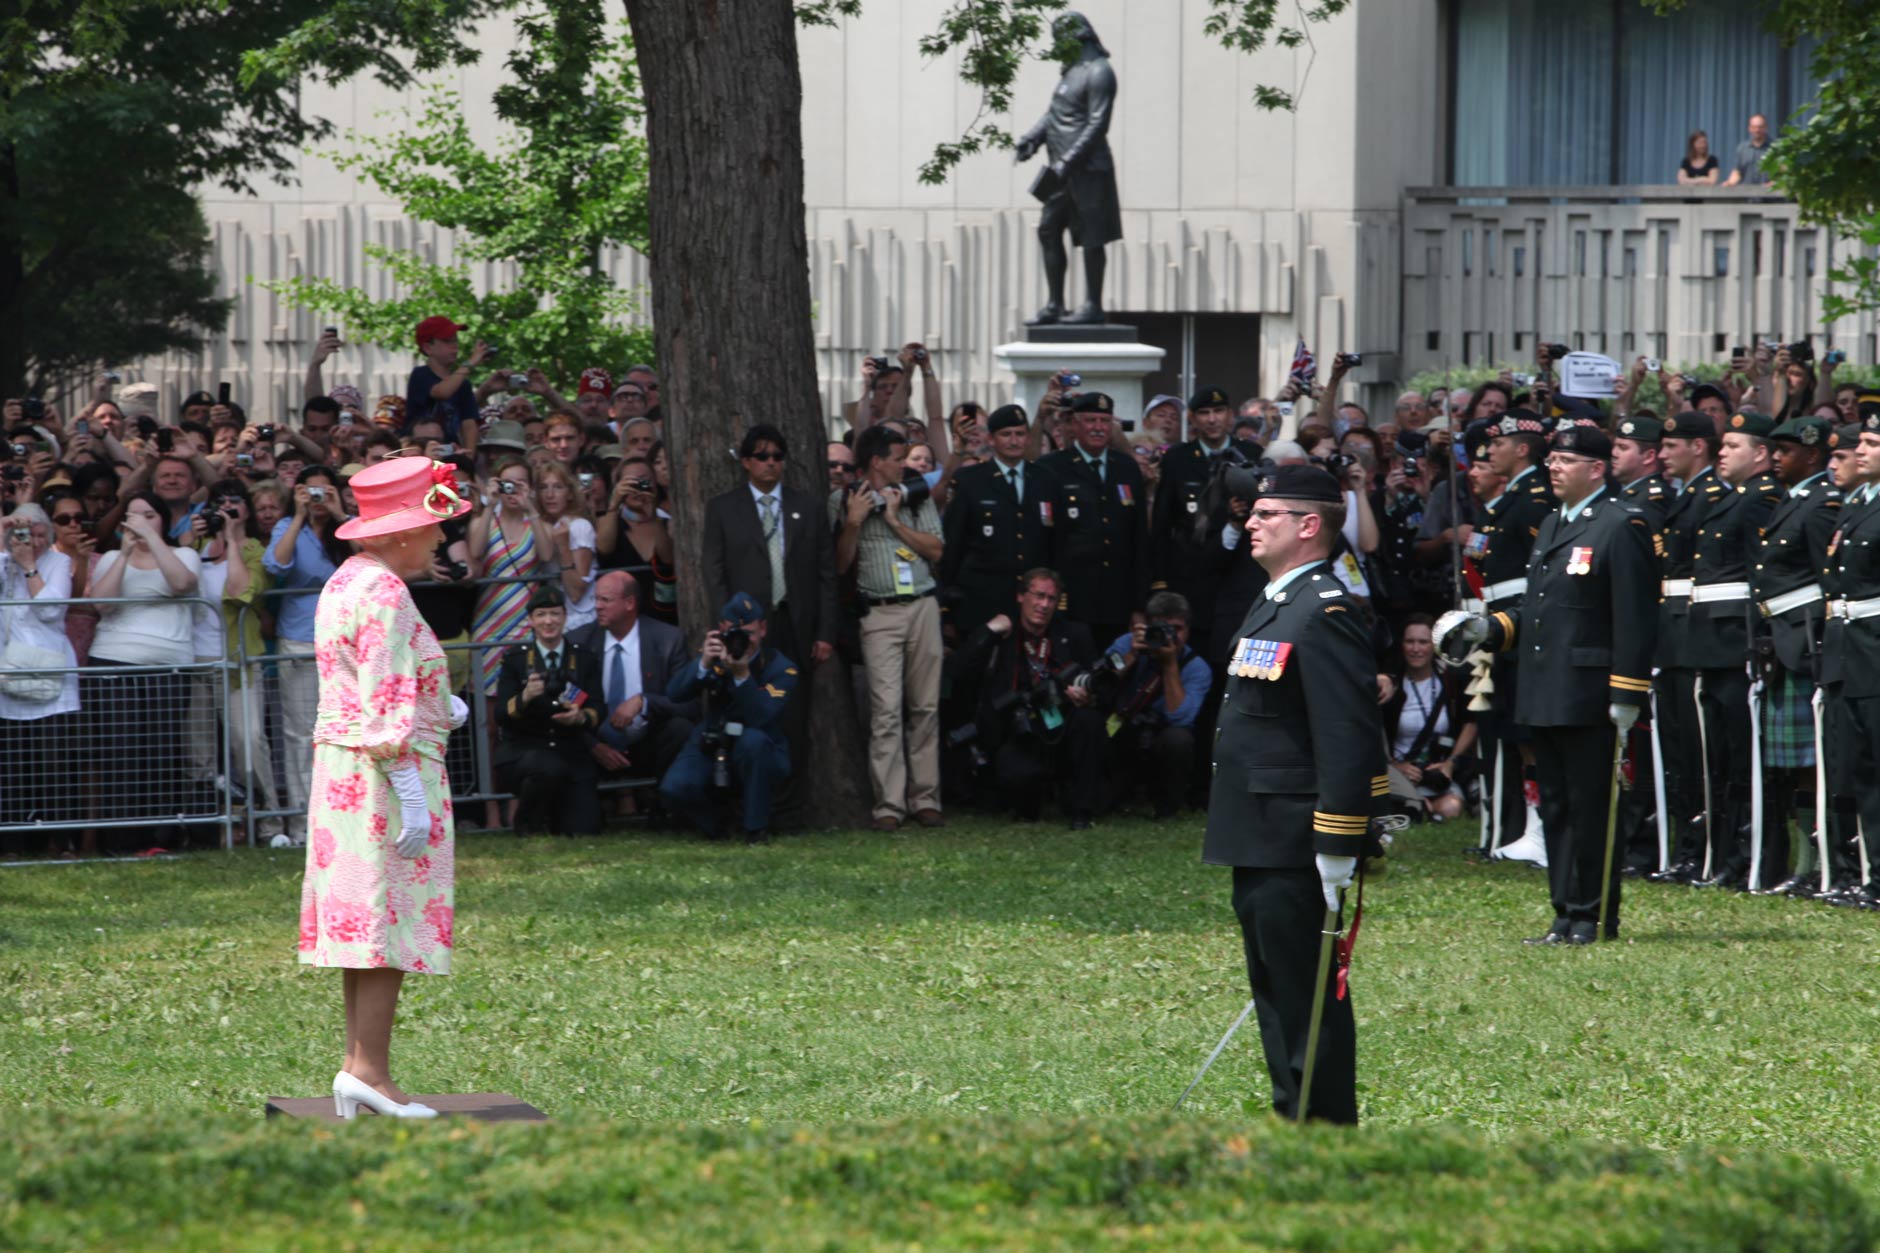 Her Majesty Queen Elizabeth II prepares to inspect the troops outside the Legislative Building, Queen's Park.